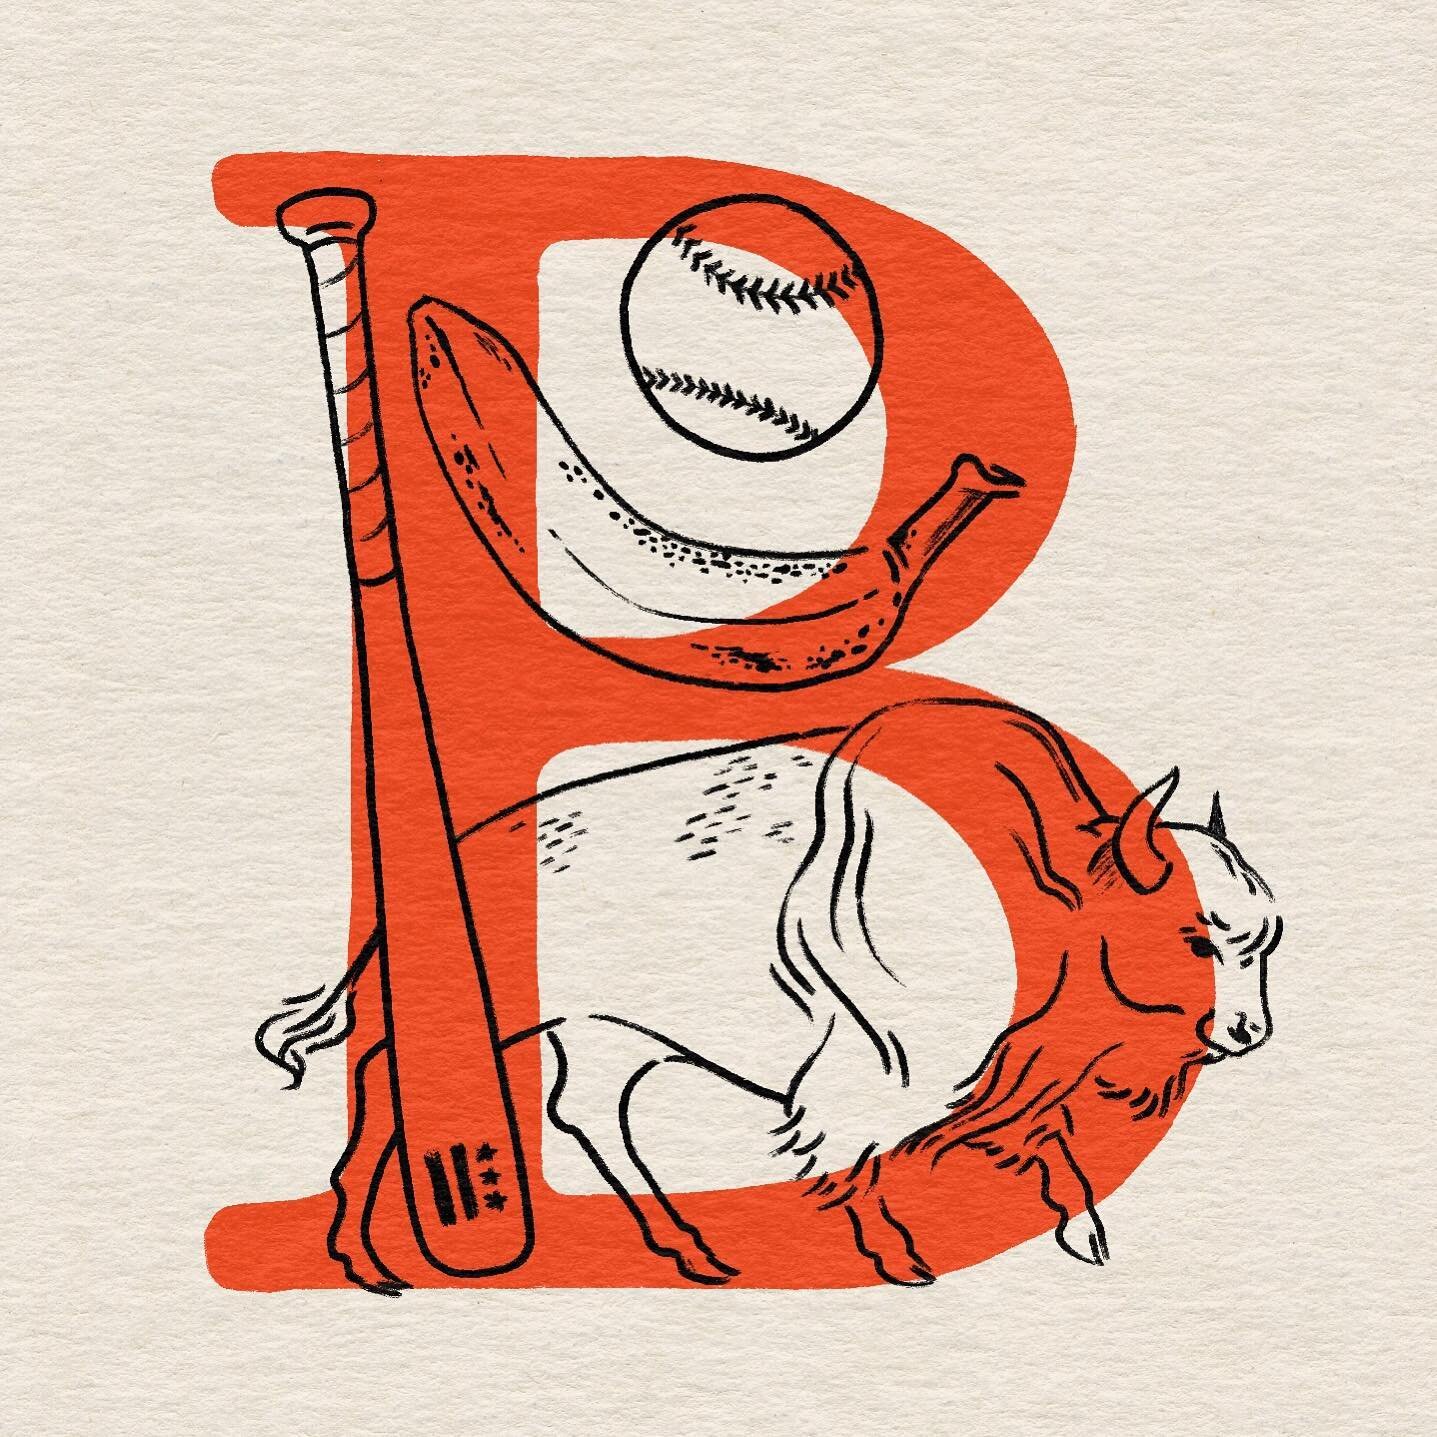 B for #36daysoftype #36days_b
&hellip;

Baseball, banana, and bison.